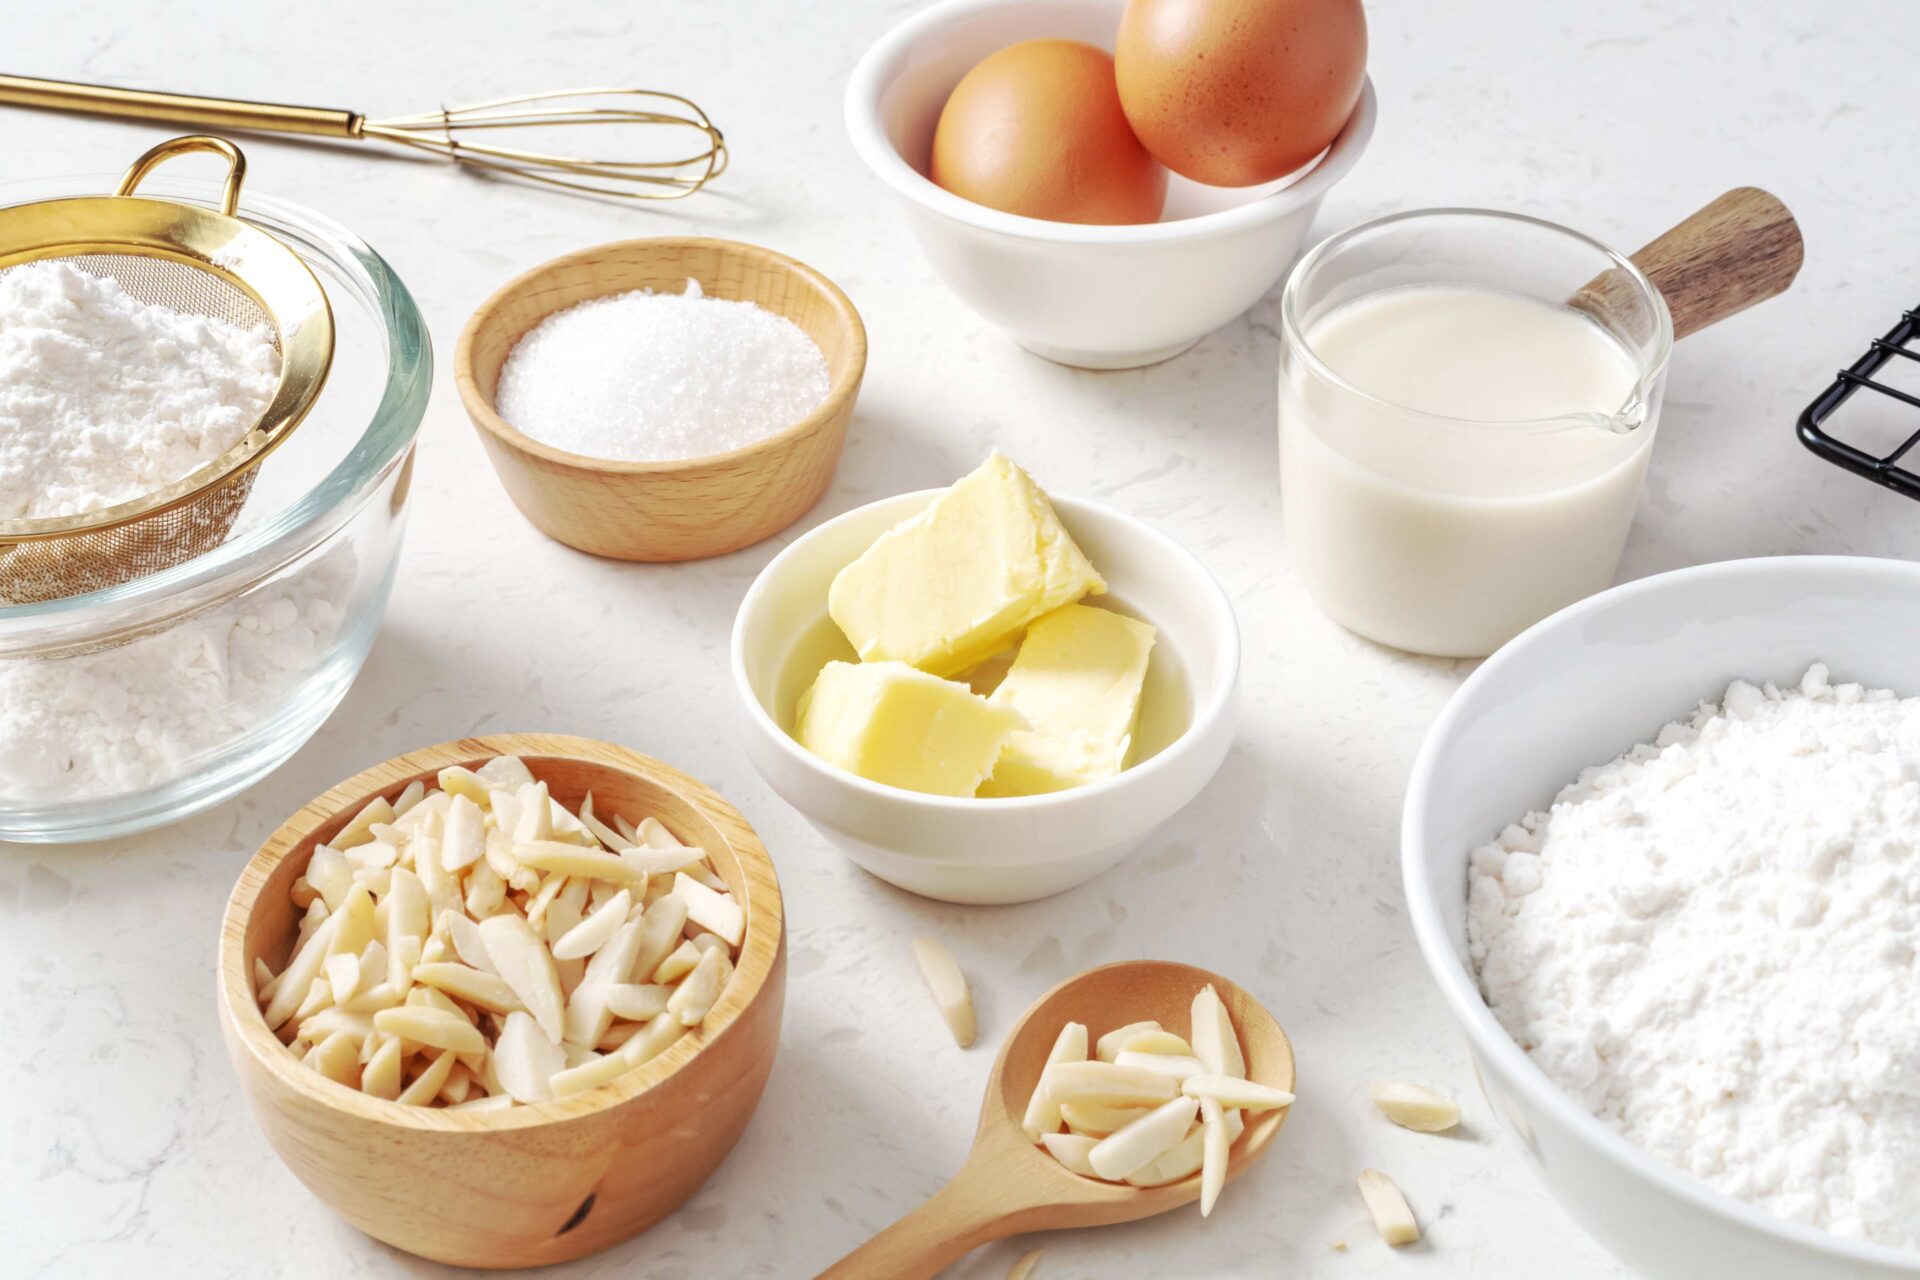 Slivered almonds in bowl next to baking ingredients